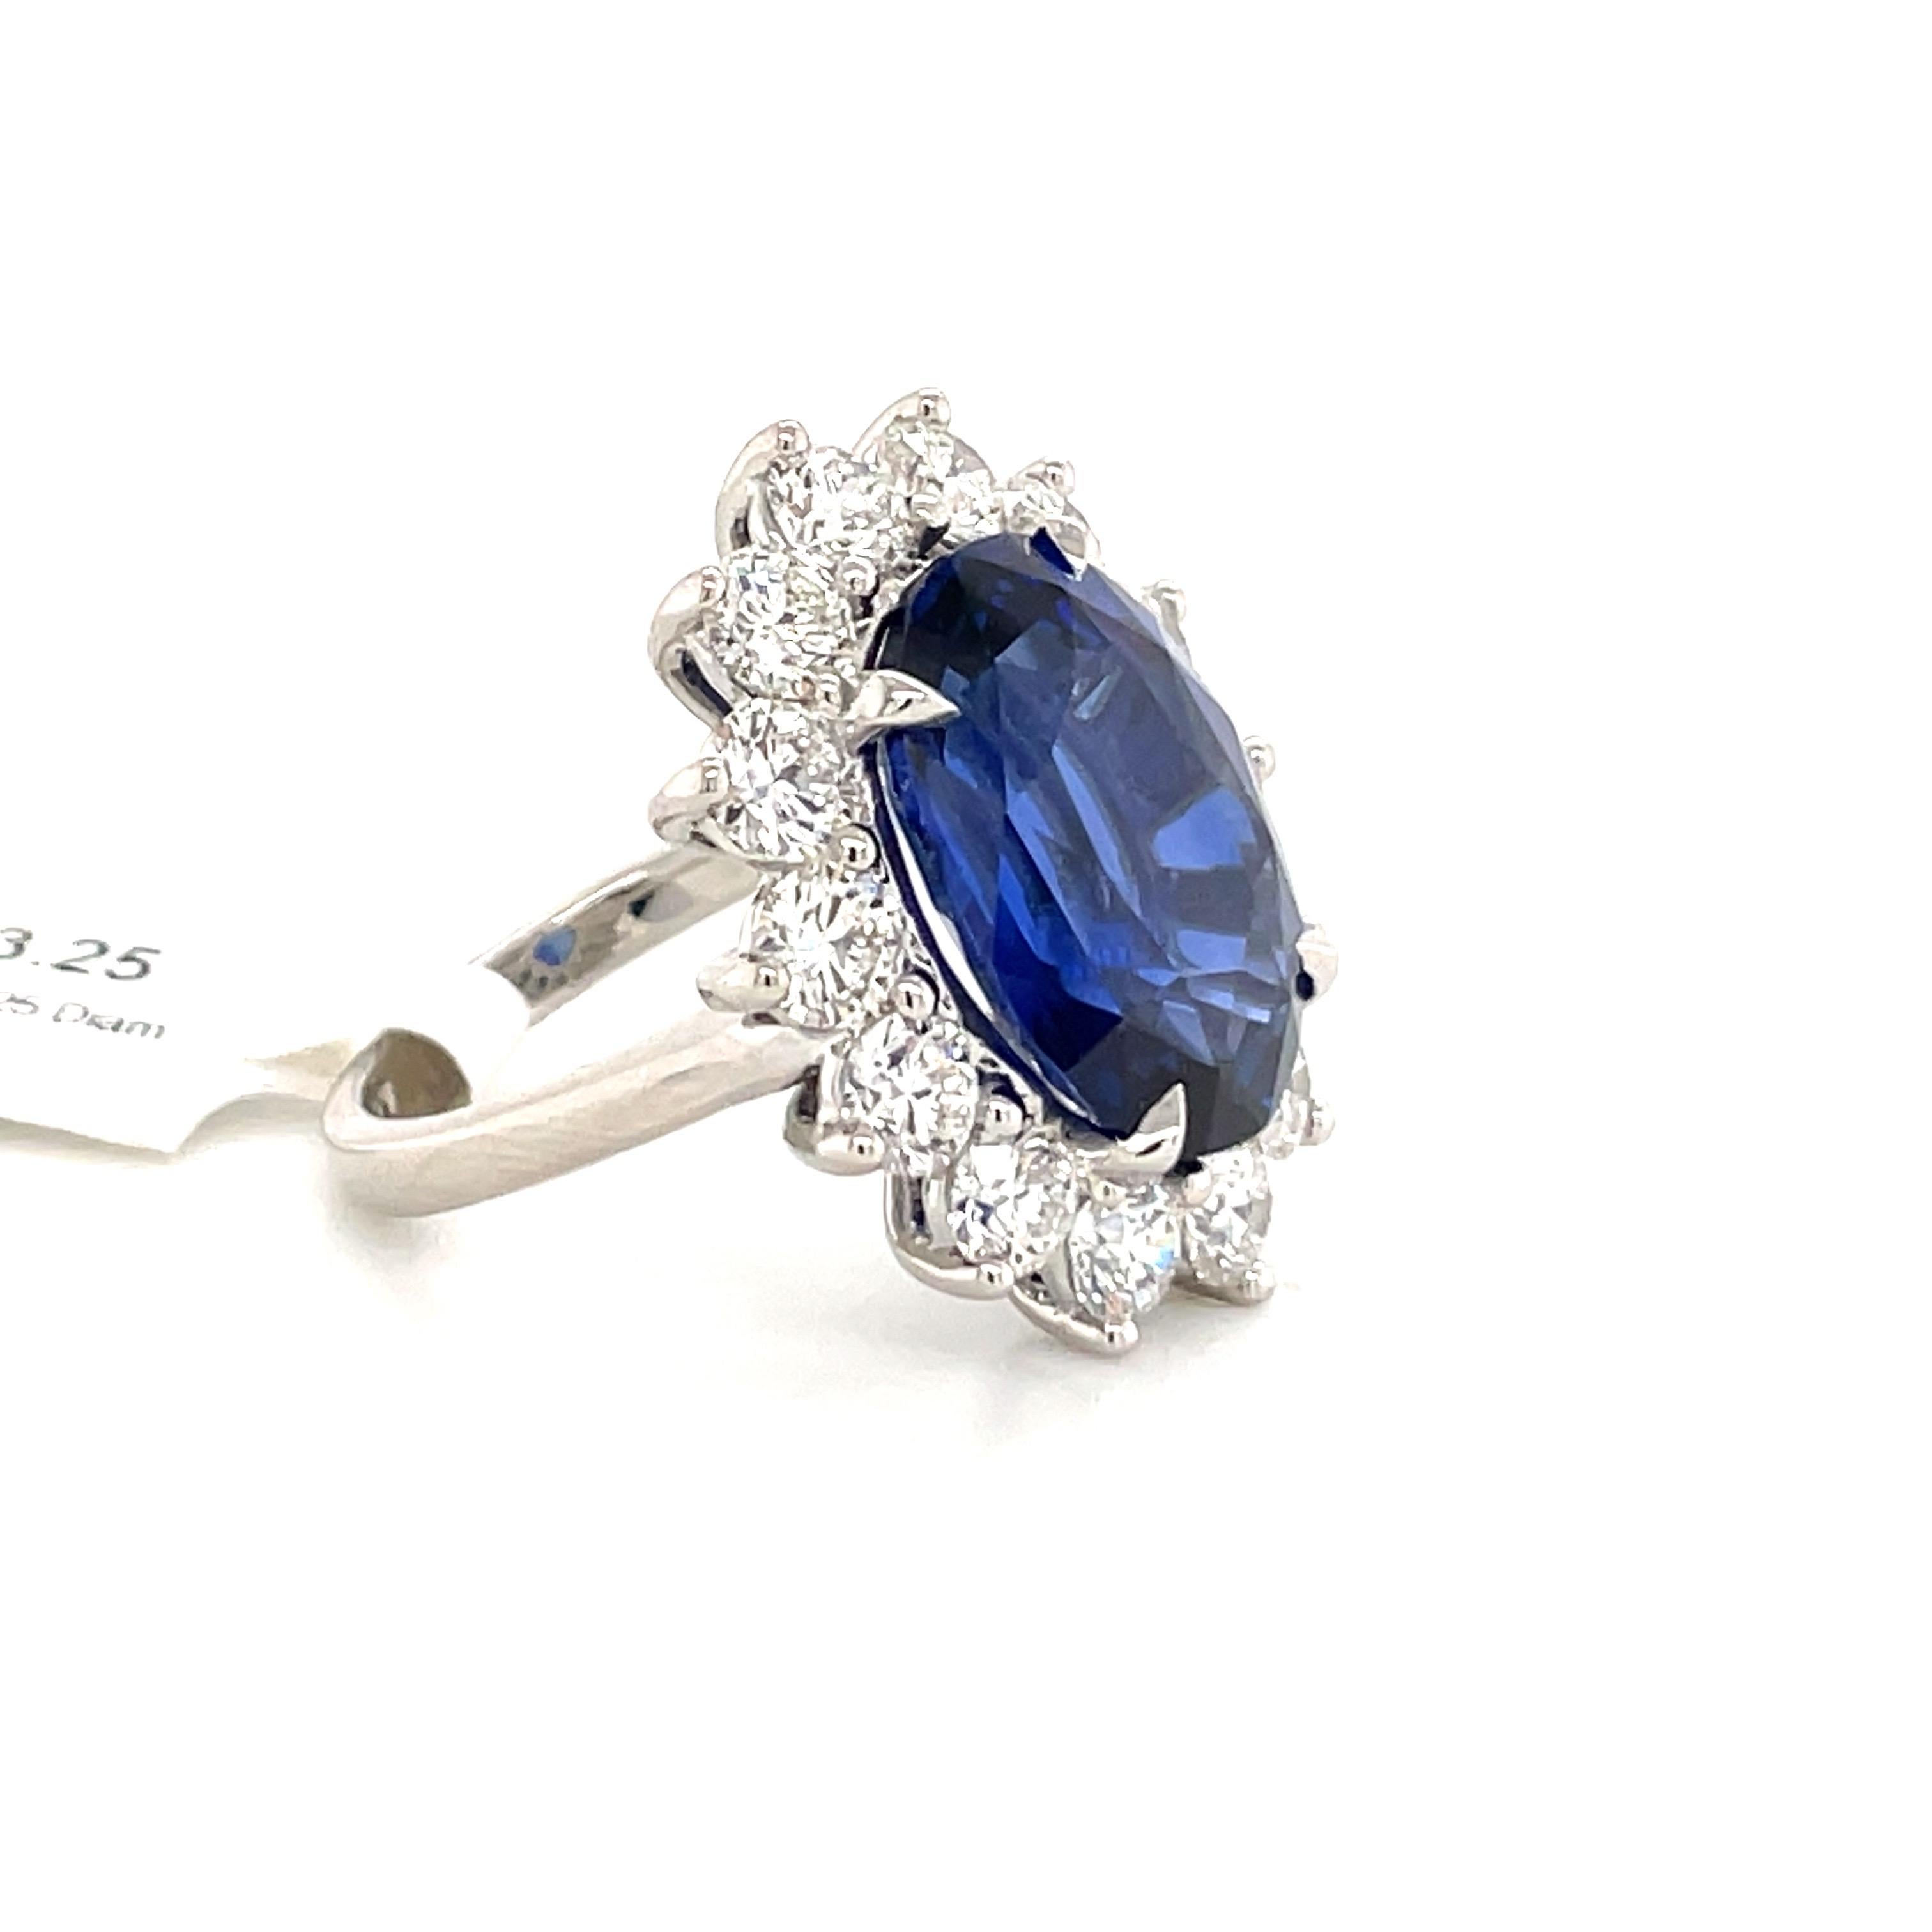 Contemporary Princess Diana Inspired GIA Certified Sapphire Diamond Ring 15.31 Carats F VS